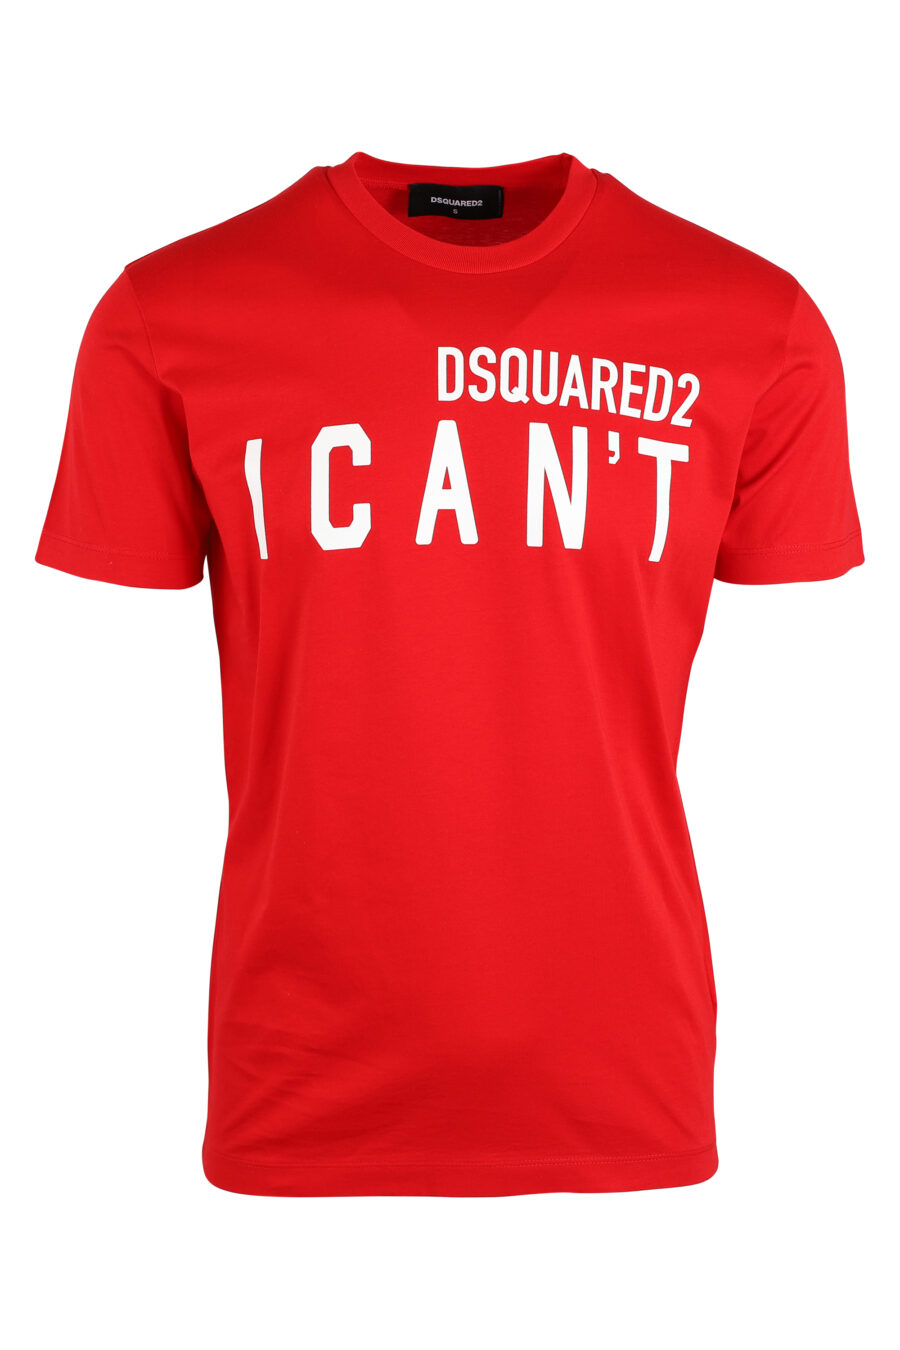 Camiseta roja con maxilogo "i can't" - IMG 0638